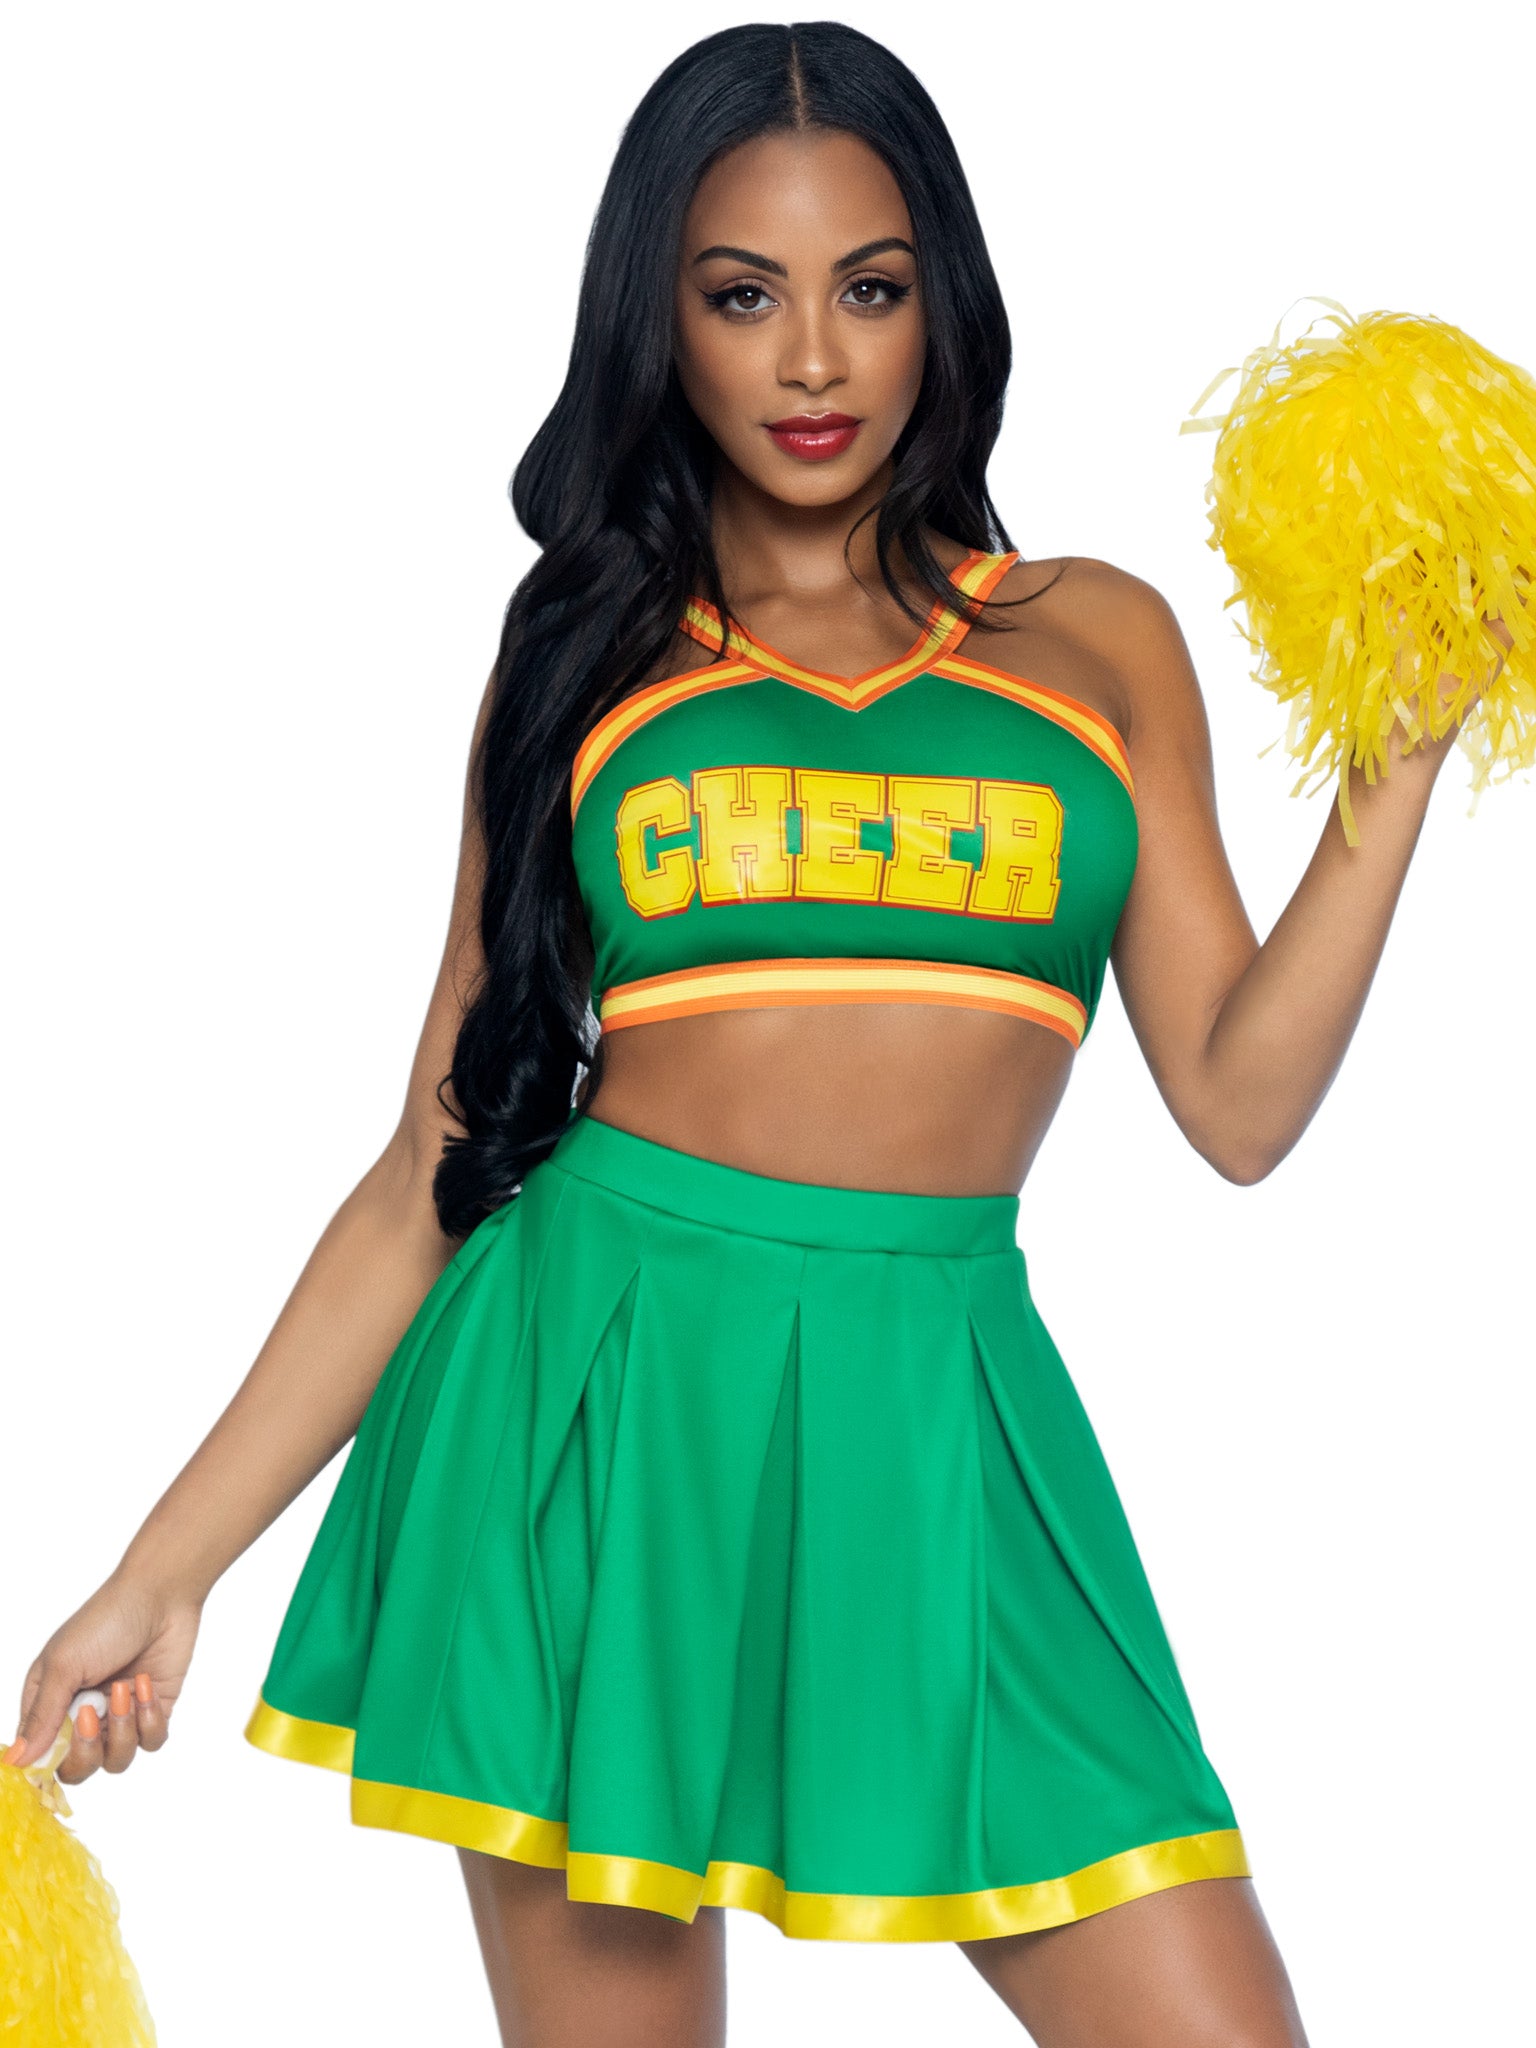 Cheerleader Costumes - Cheerleading Outfits